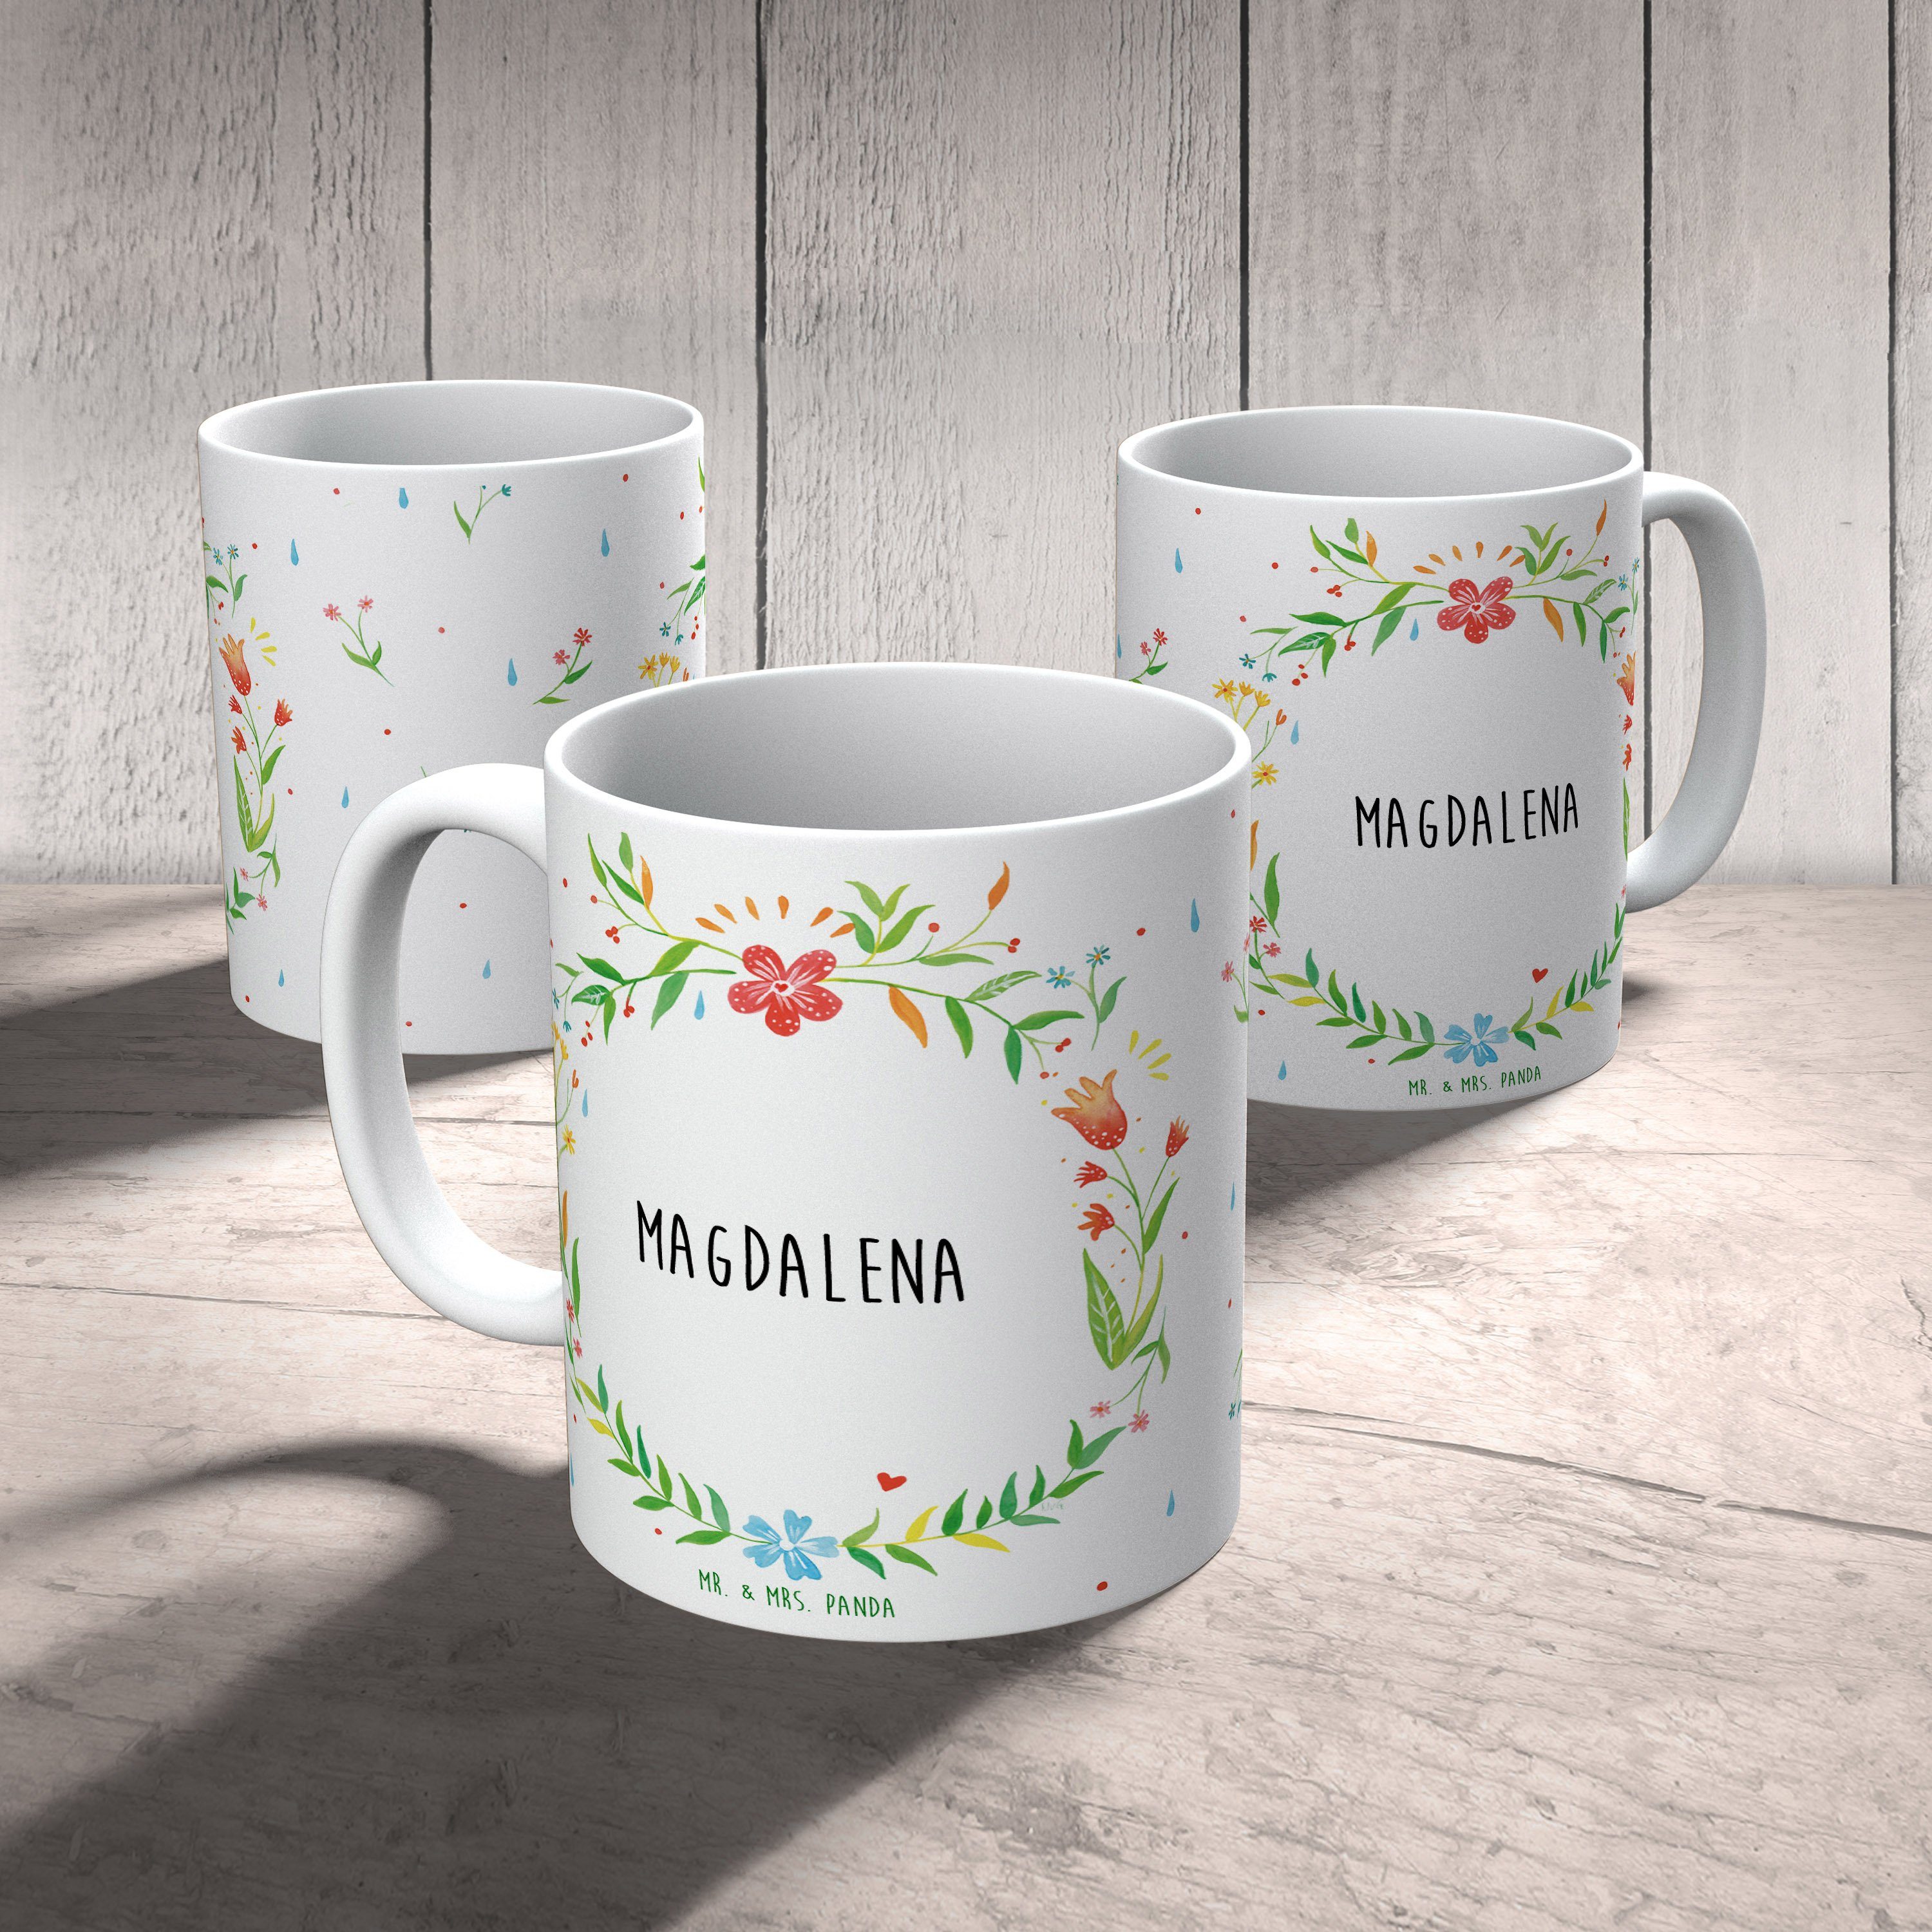 Mr. & Mrs. Panda Keramik Magdalena - Tasse, Keramiktasse, Geschenk, Kaffeebecher, Tasse Ta, Teetasse